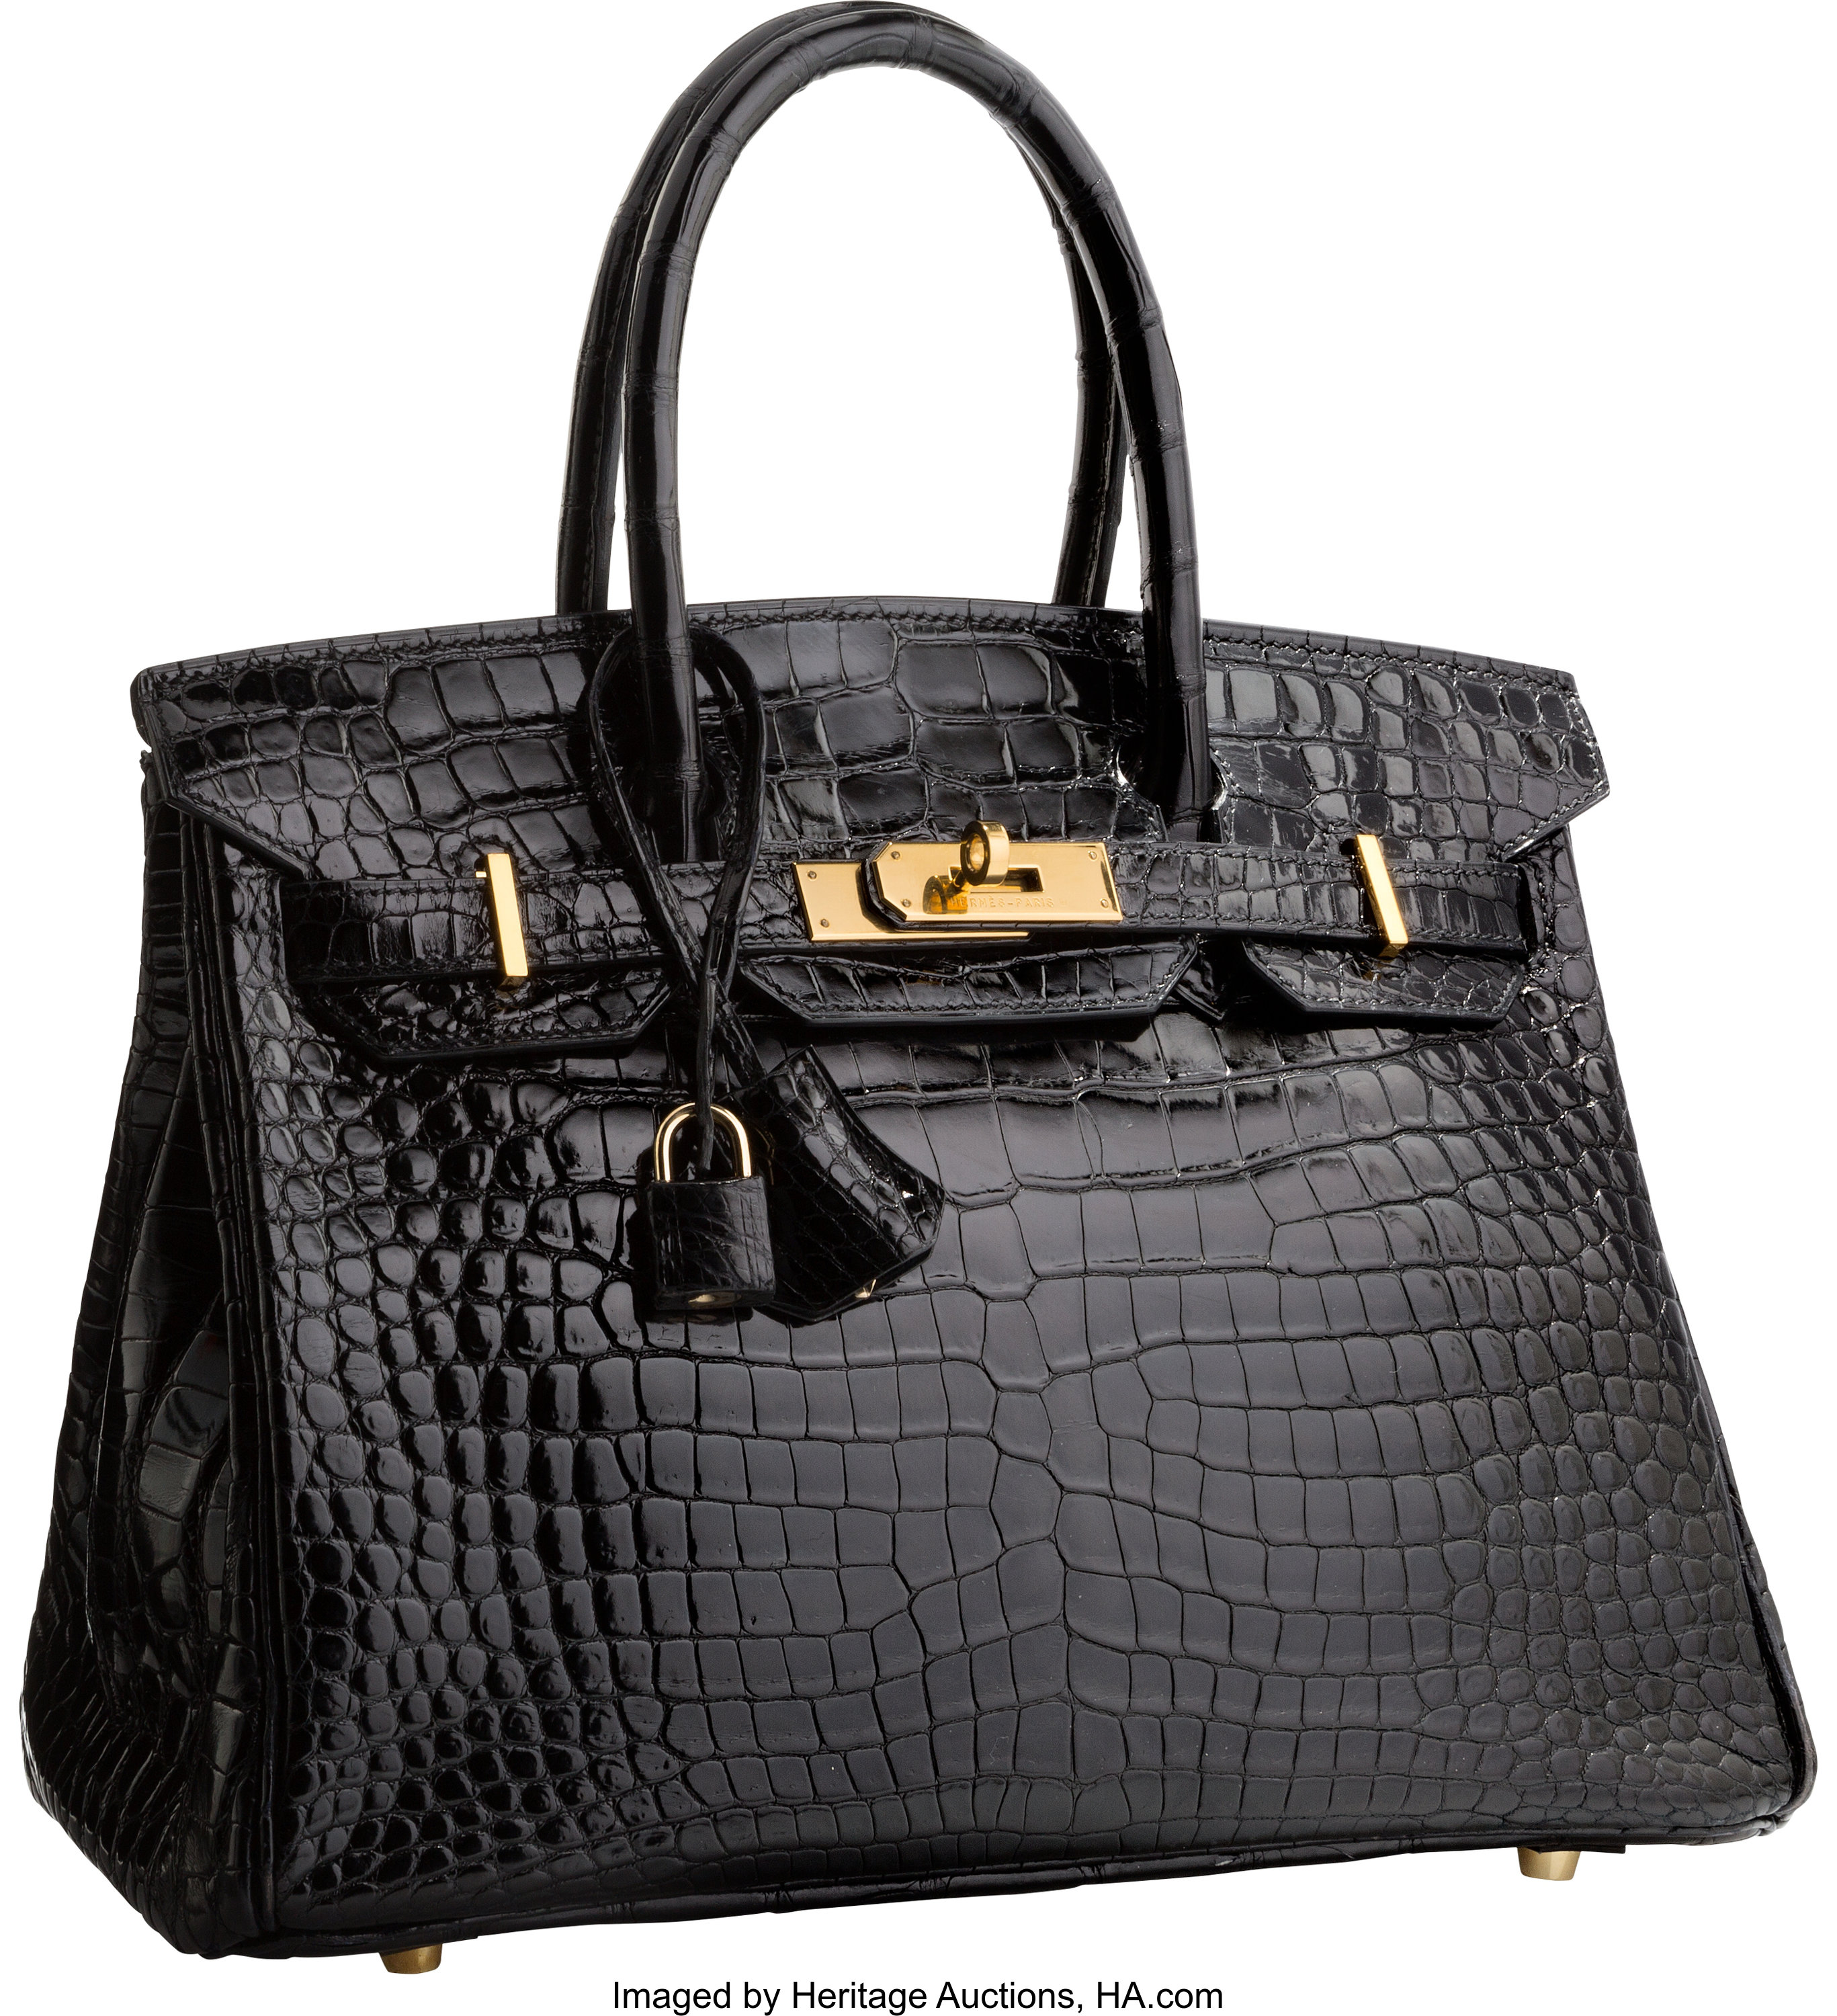 Hermes 30cm Shiny Black Porosus Crocodile Birkin Bag with Gold, Lot #58102